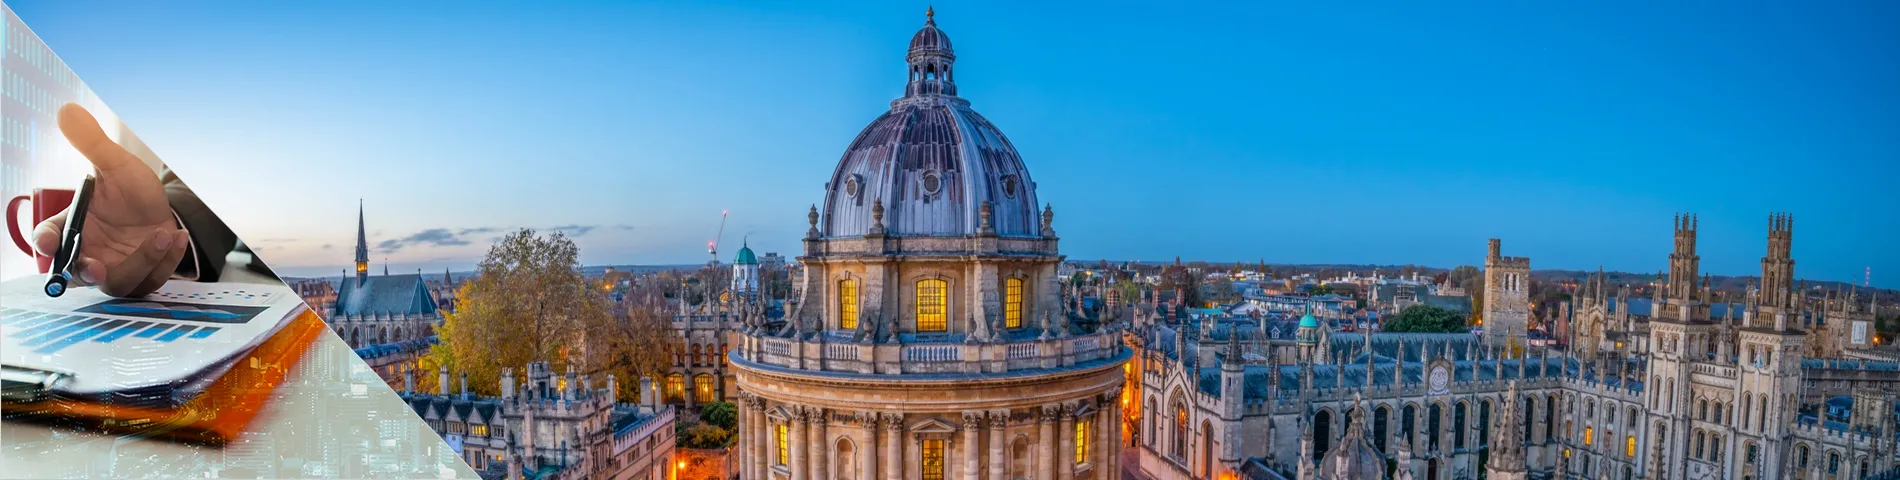 Oxford - Bankacılık ve Finans